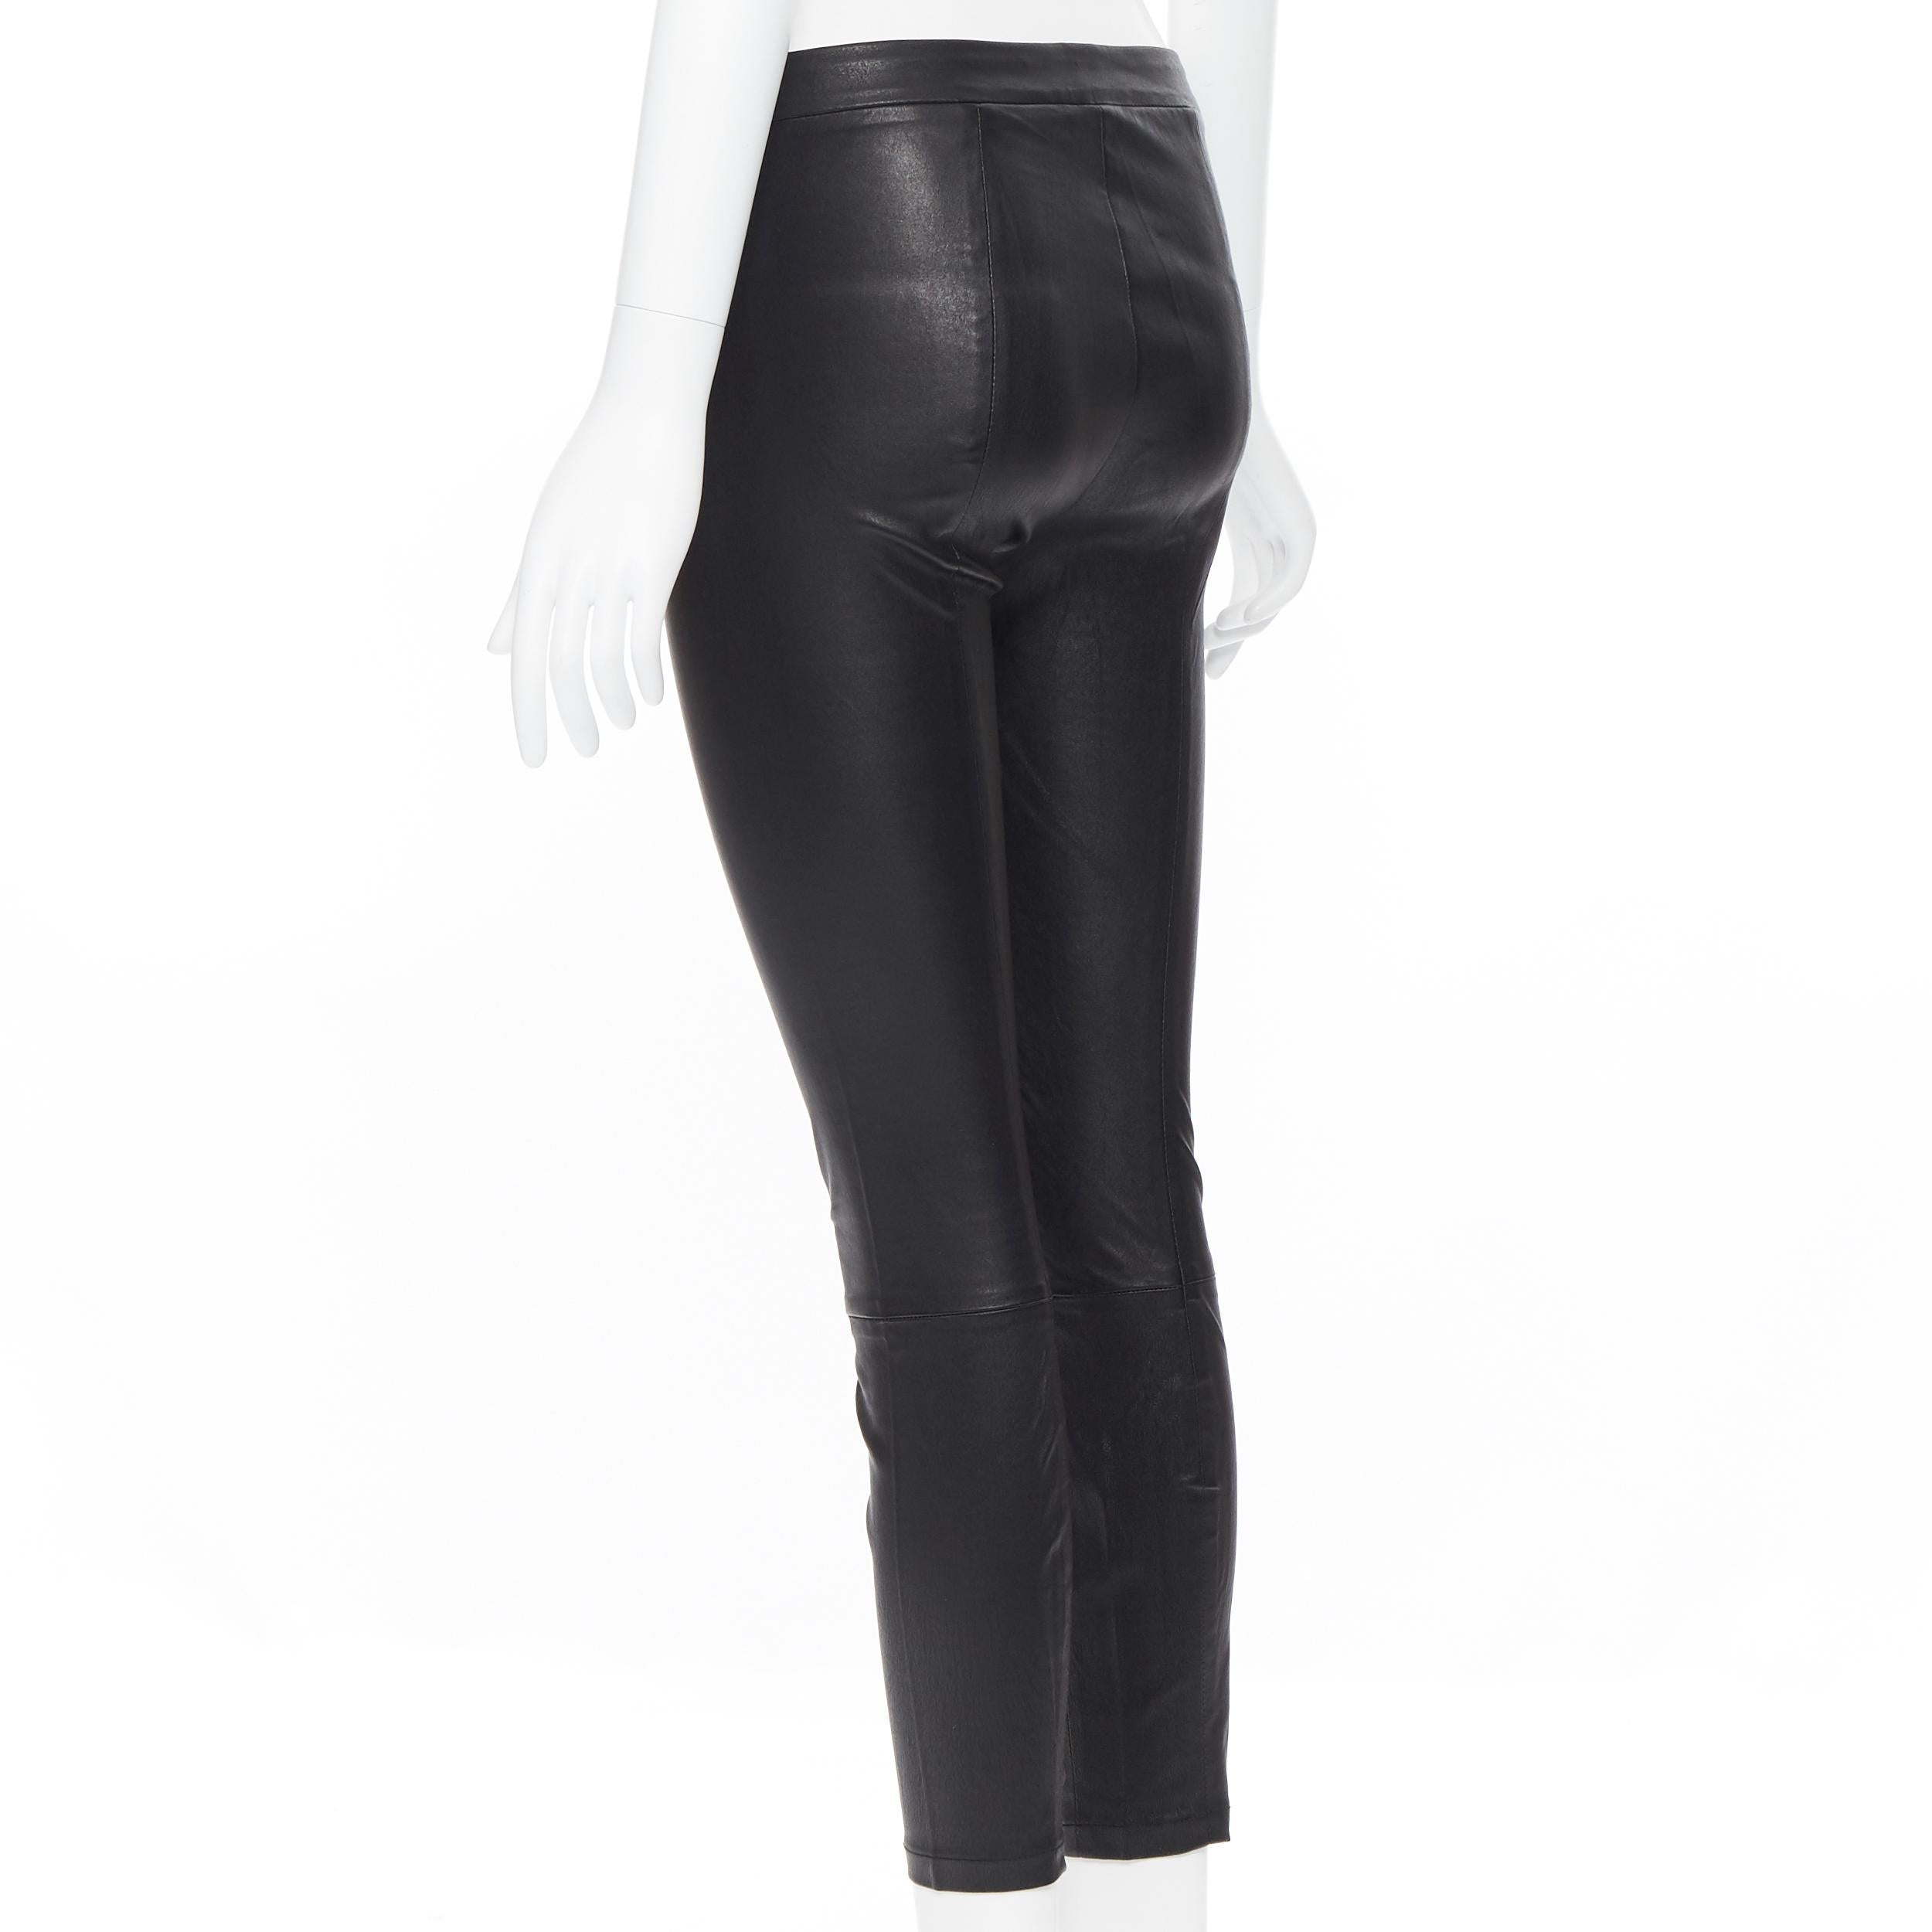 VINCE 100% leather classic black minimal stretchy skinny leg pants XS 2